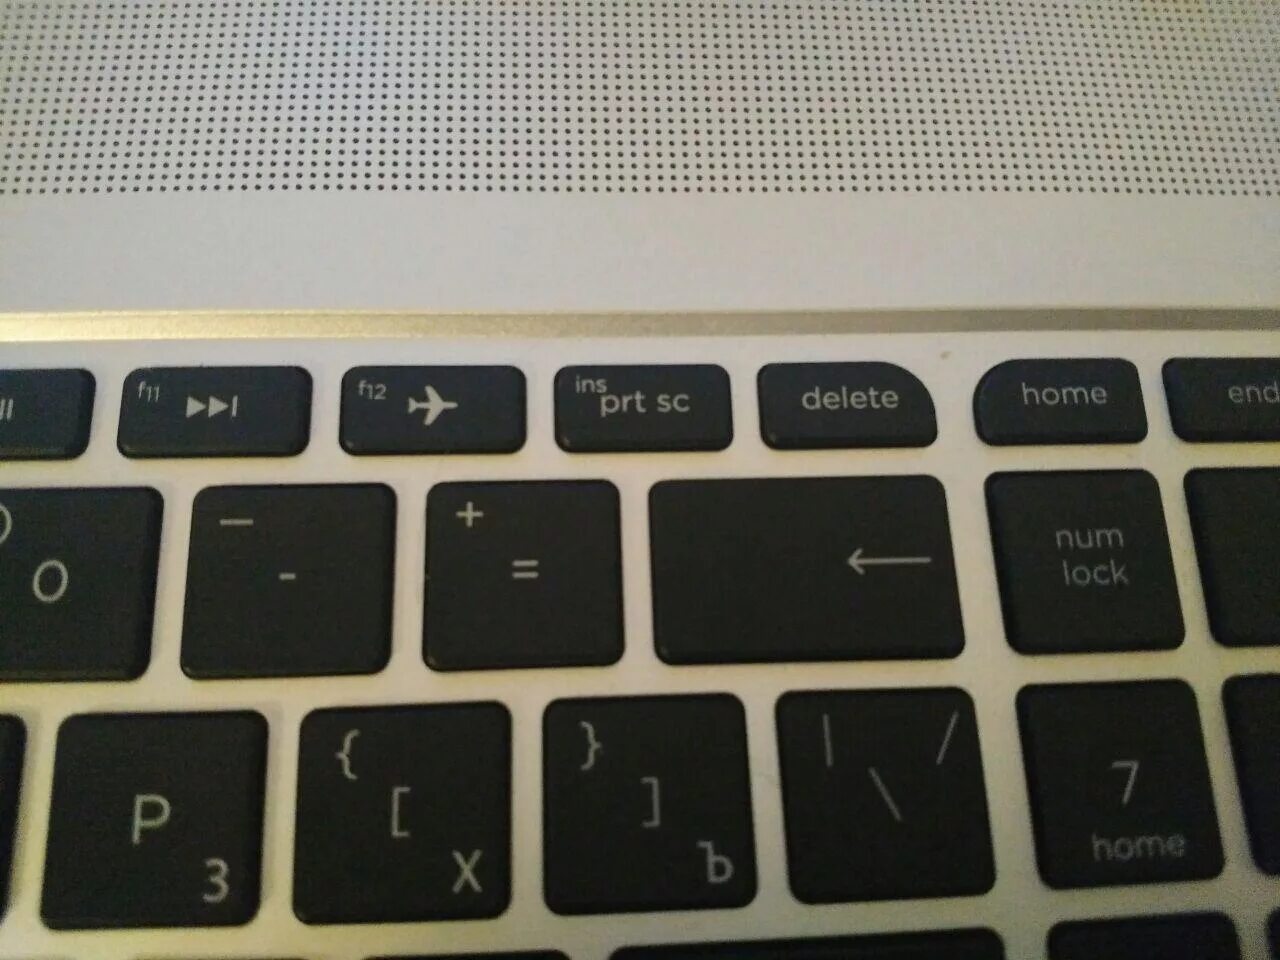 Нажать клавишу insert